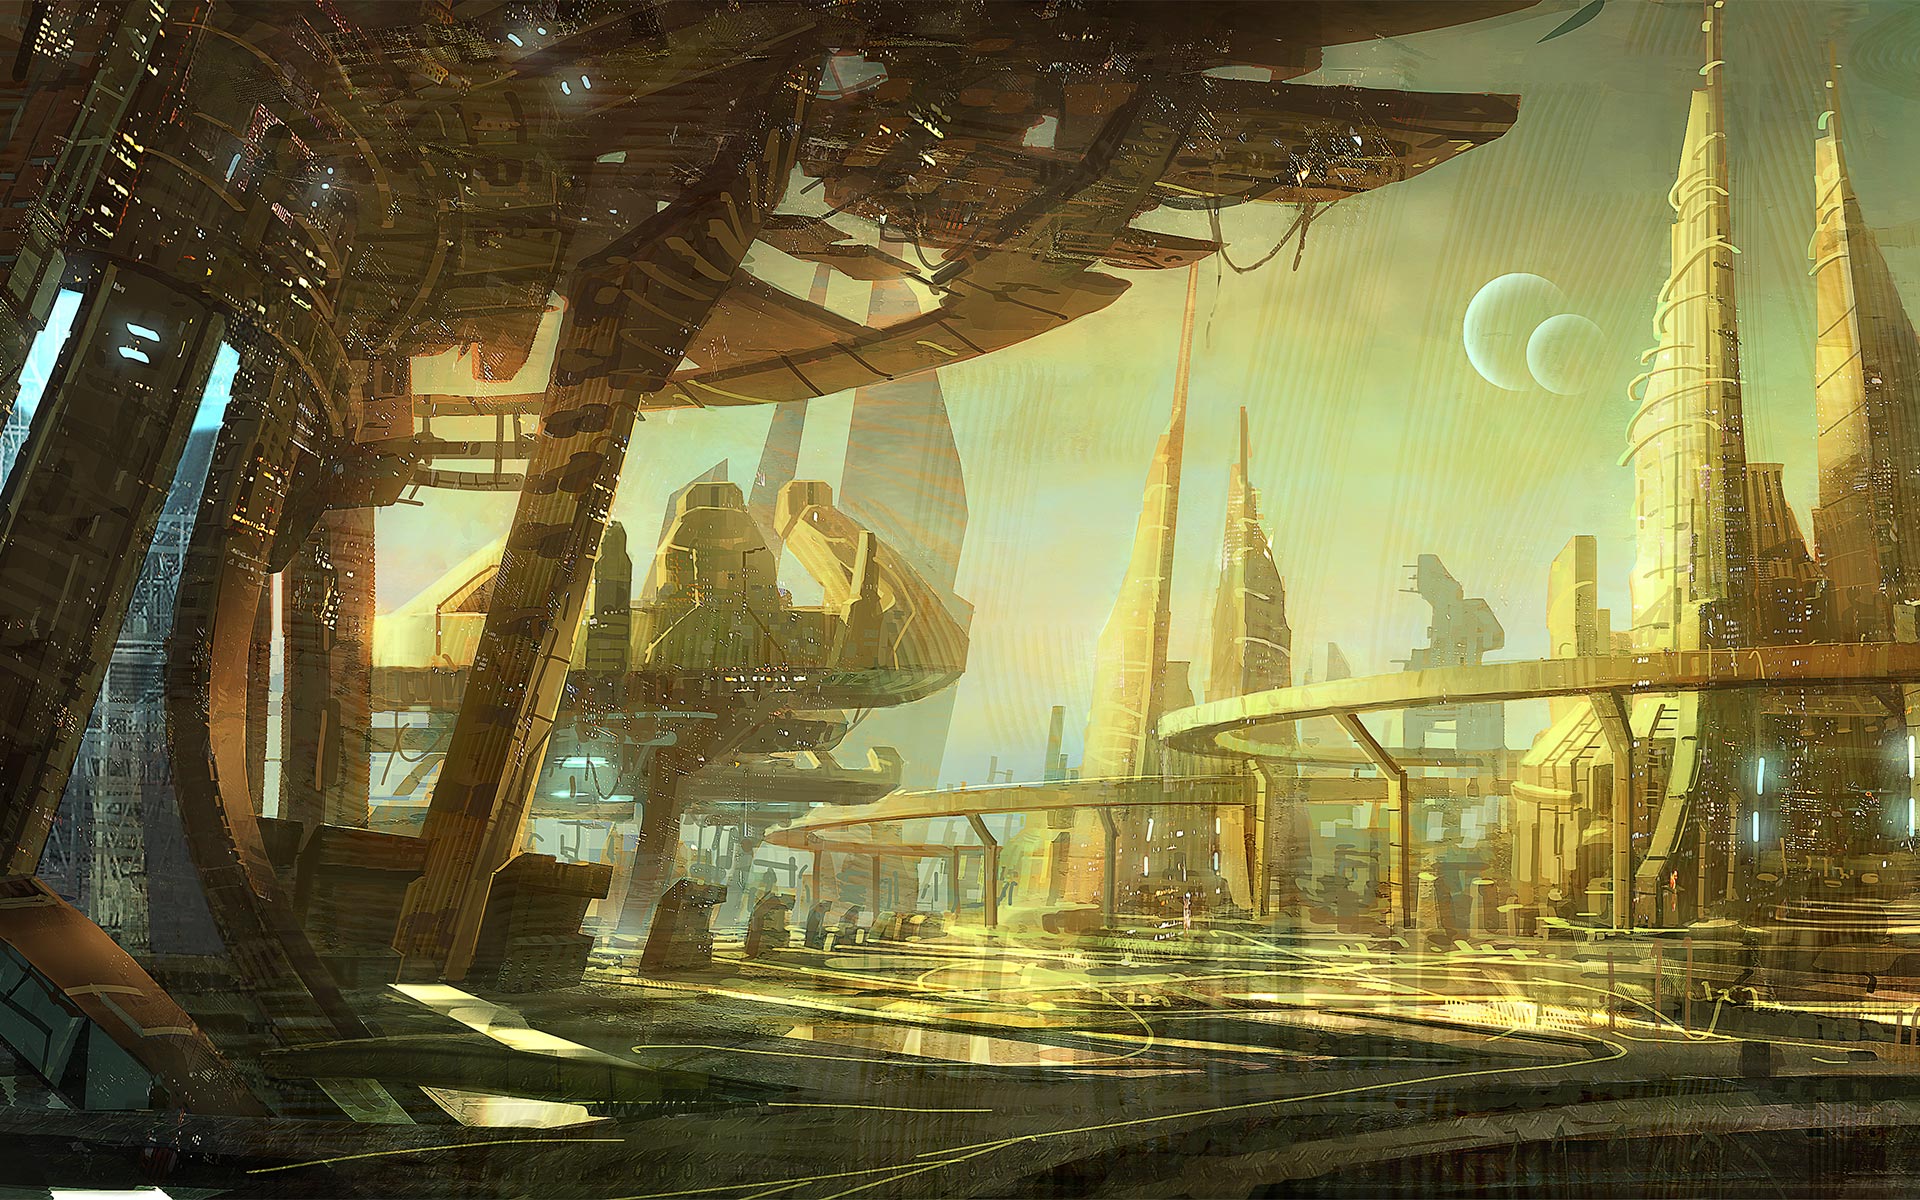 Illustration of a futuristic sci-fi city